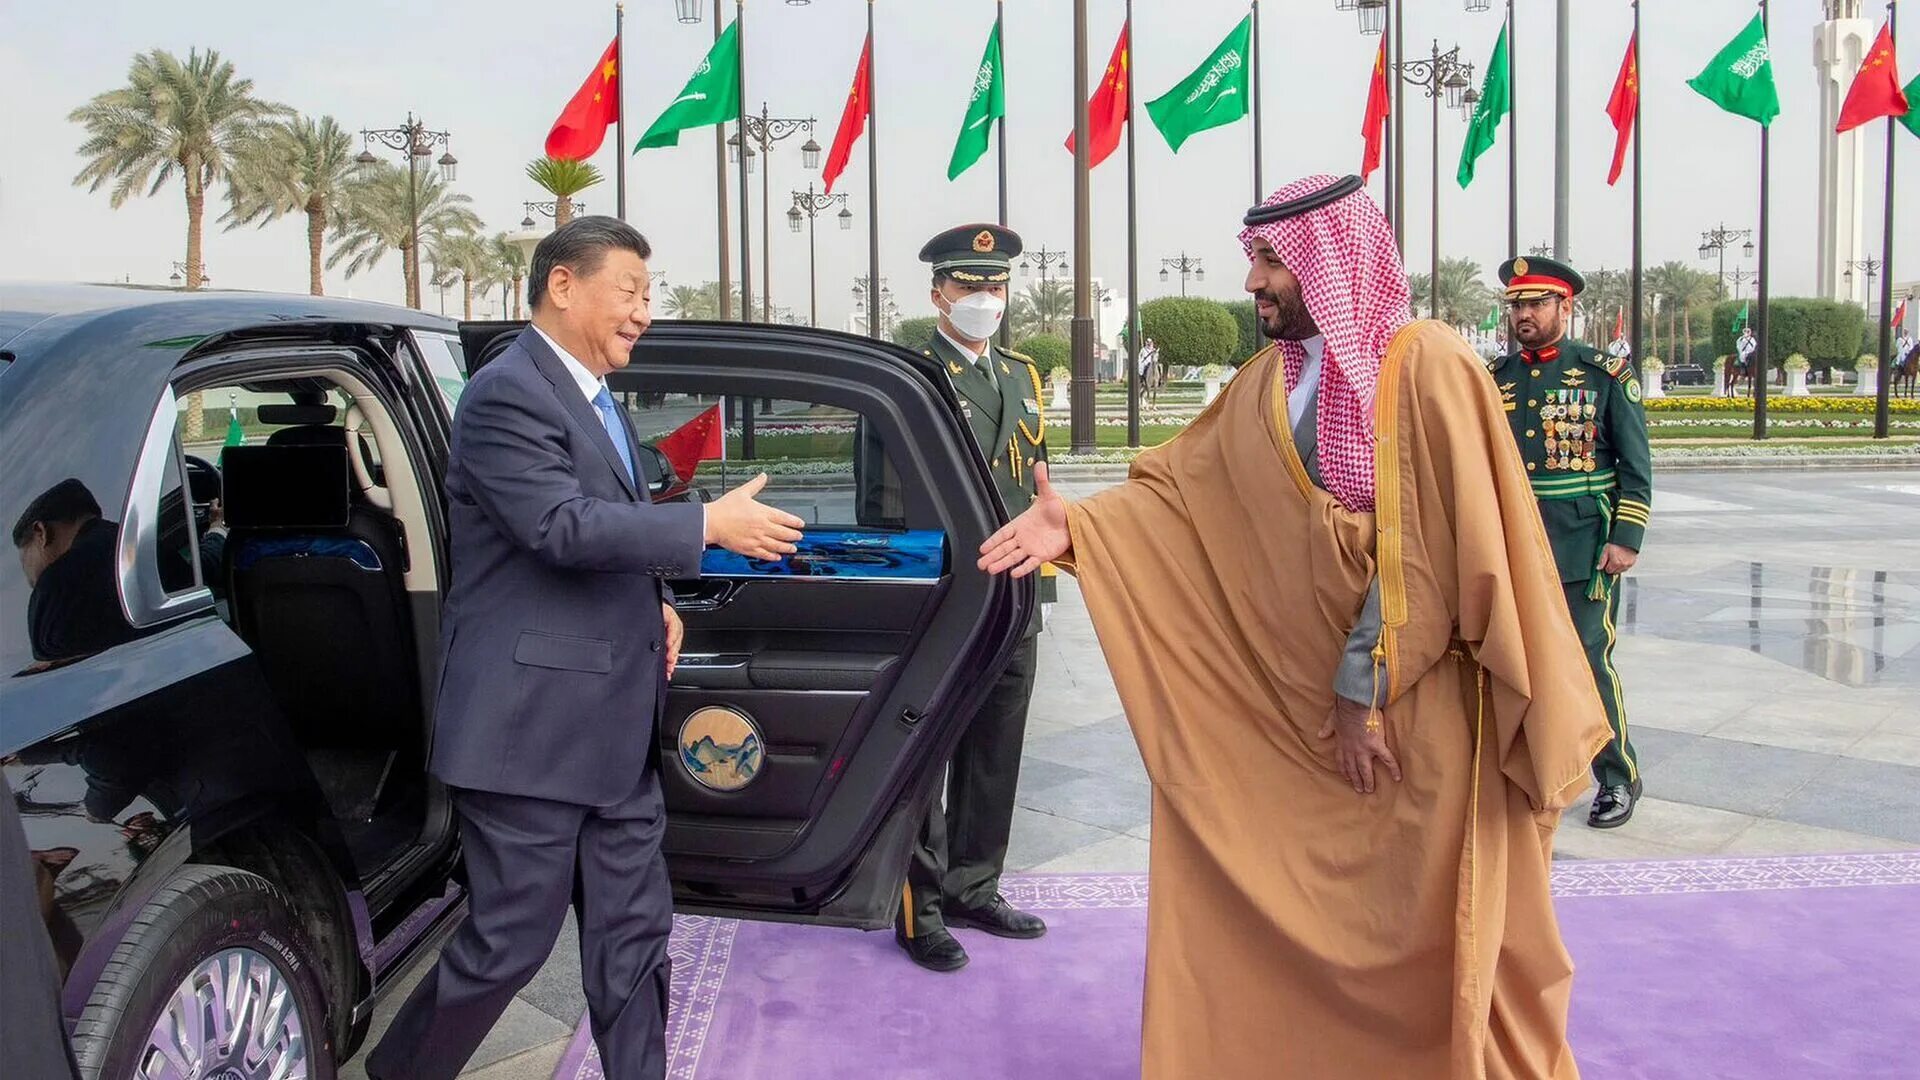 Мухаммед ибн Салман Аль Сауд. Си Цзиньпин в Саудовской Аравии. Мухаммед ибн Салман Аль Сауд наследные принцы Саудовской Аравии. Принц Саудовской Аравии 2023.